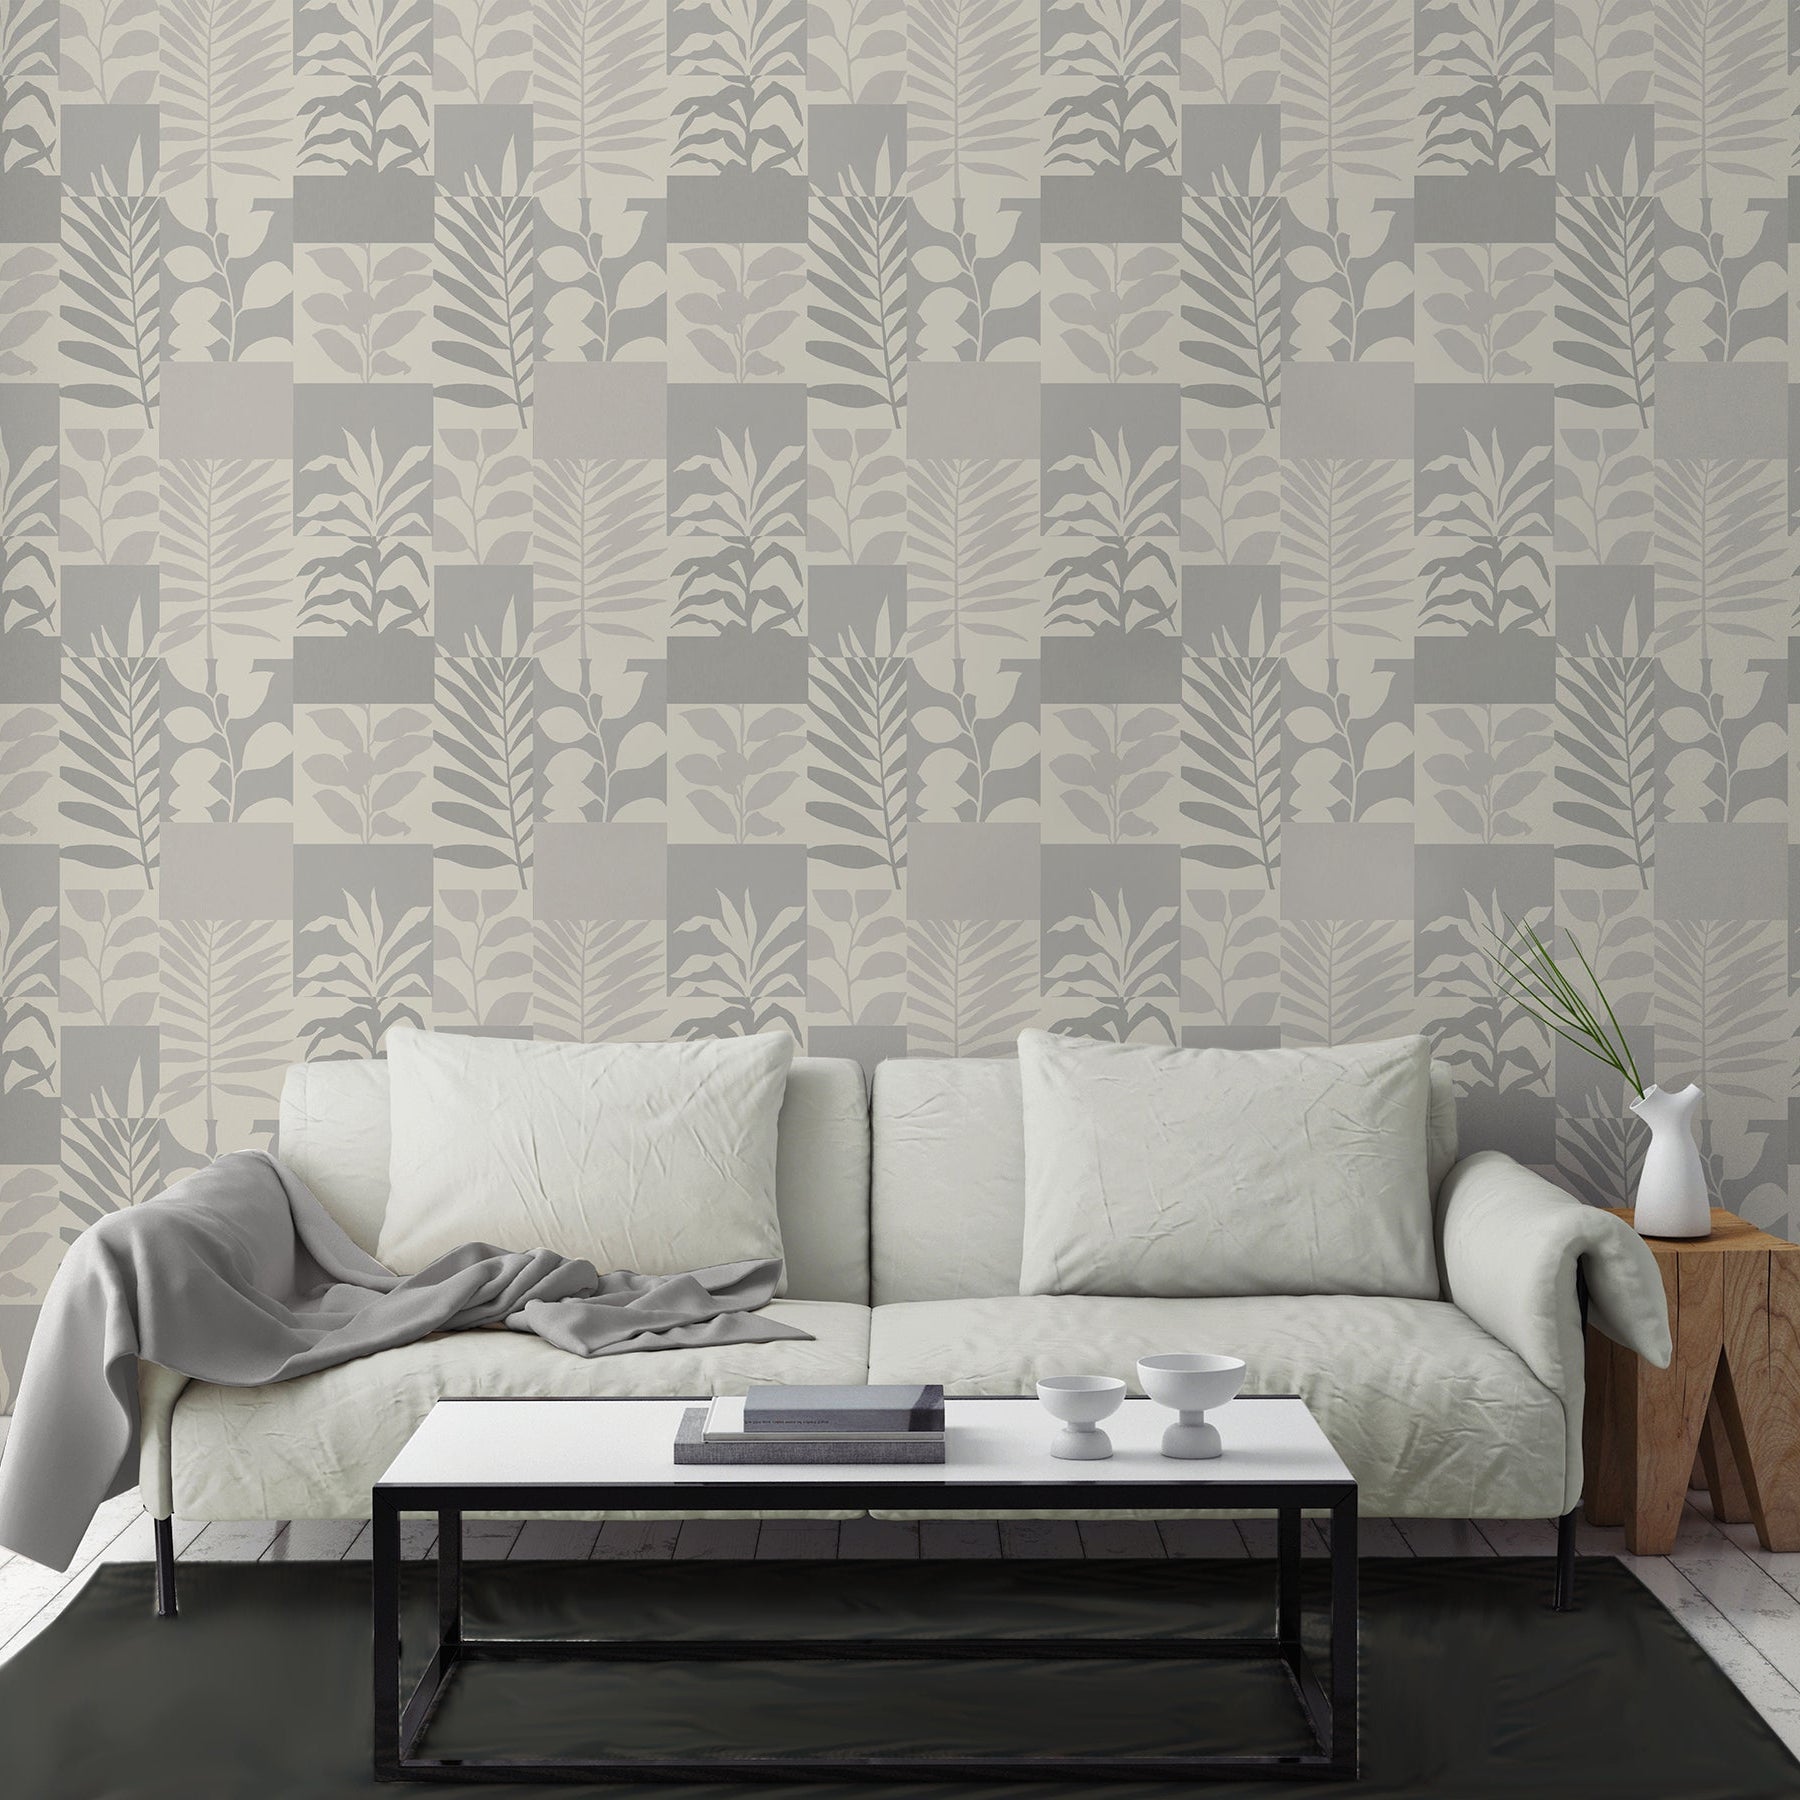 Shop 2836-m1383 shades of grey greys leaf wallpaper advantage Wallpaper